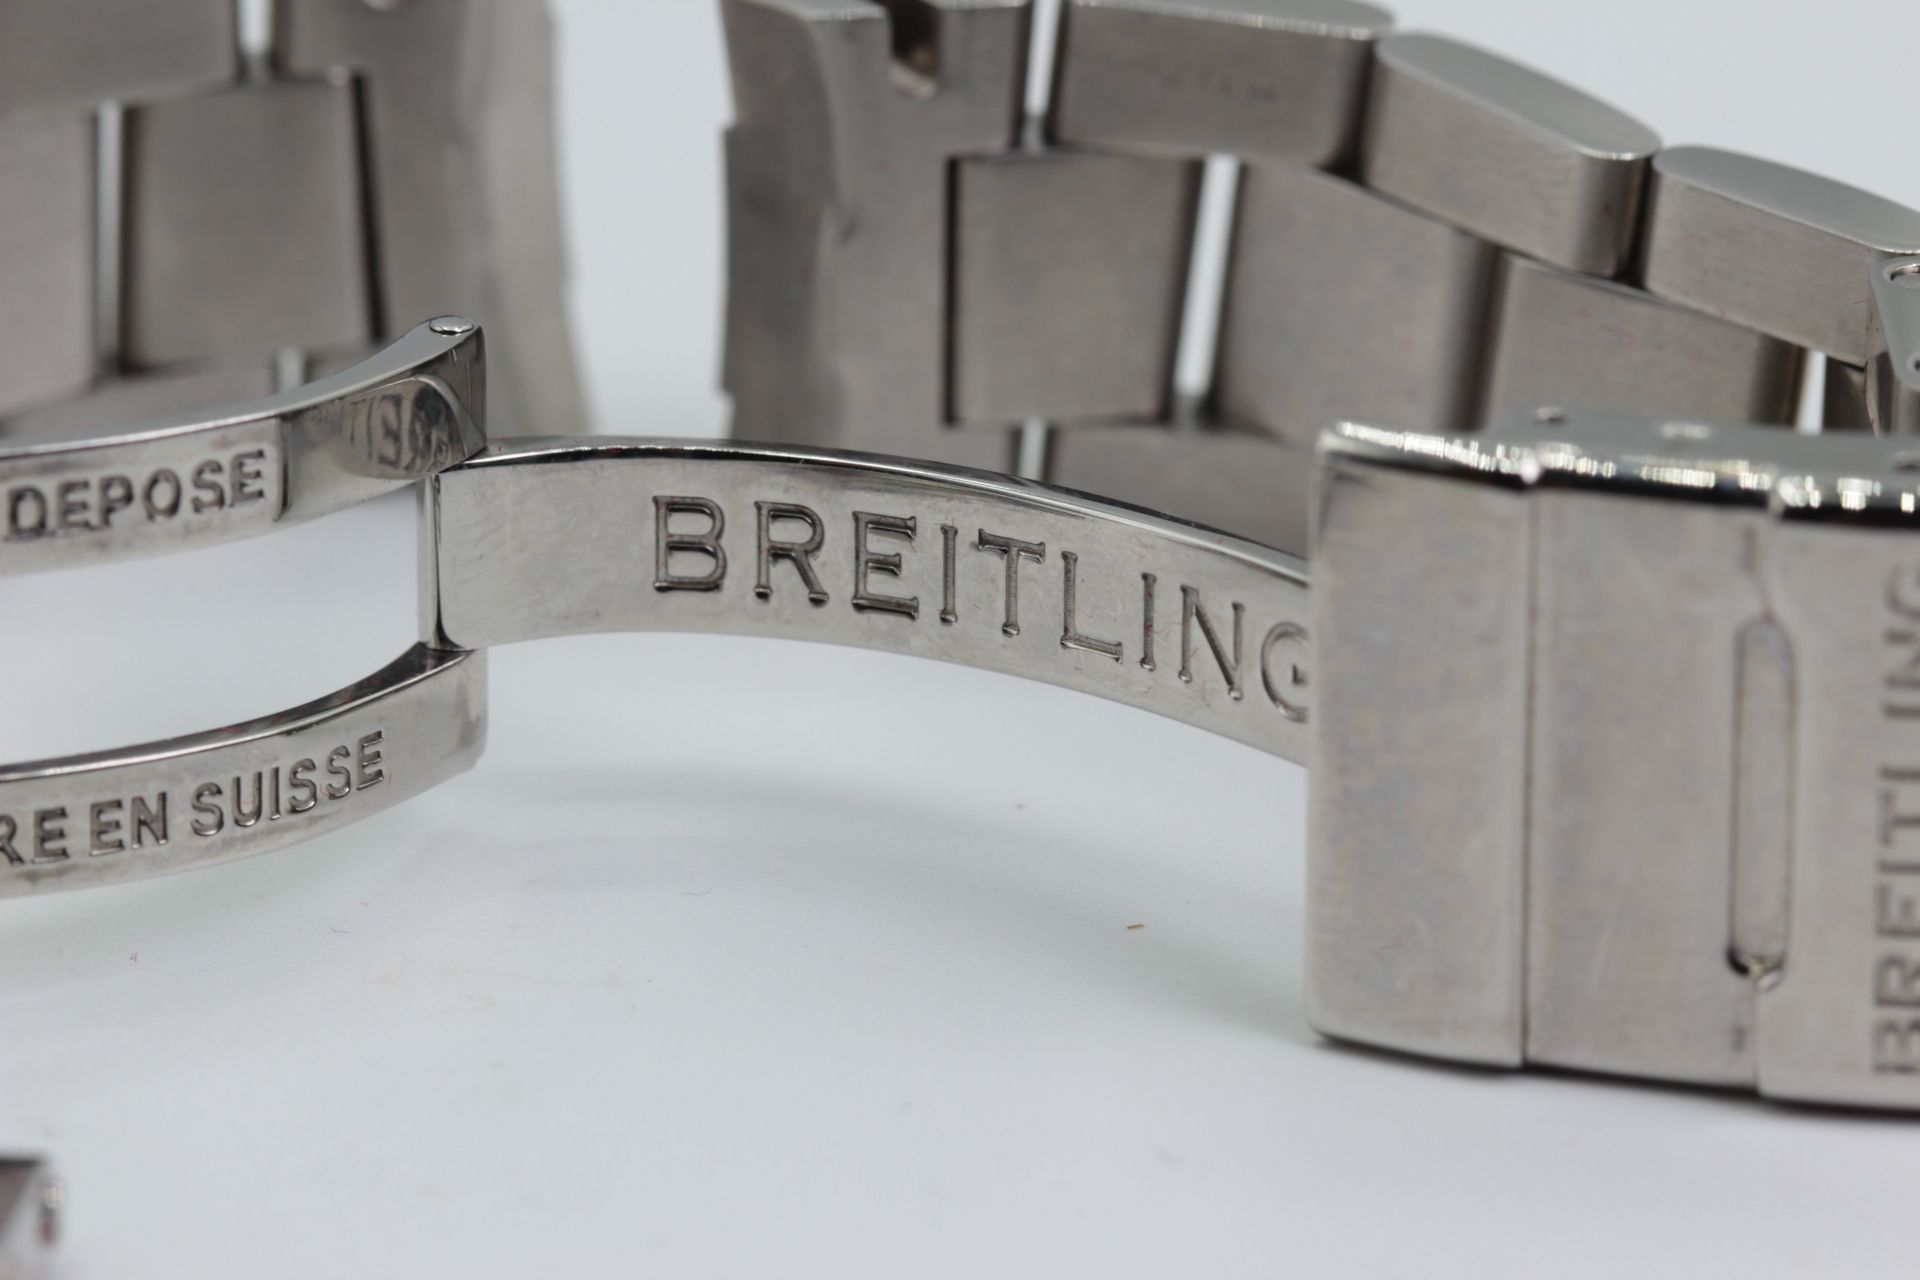 Breitling Brand Bracelet for Wrist Watch - Polished Steel - No 182A - Image 2 of 4